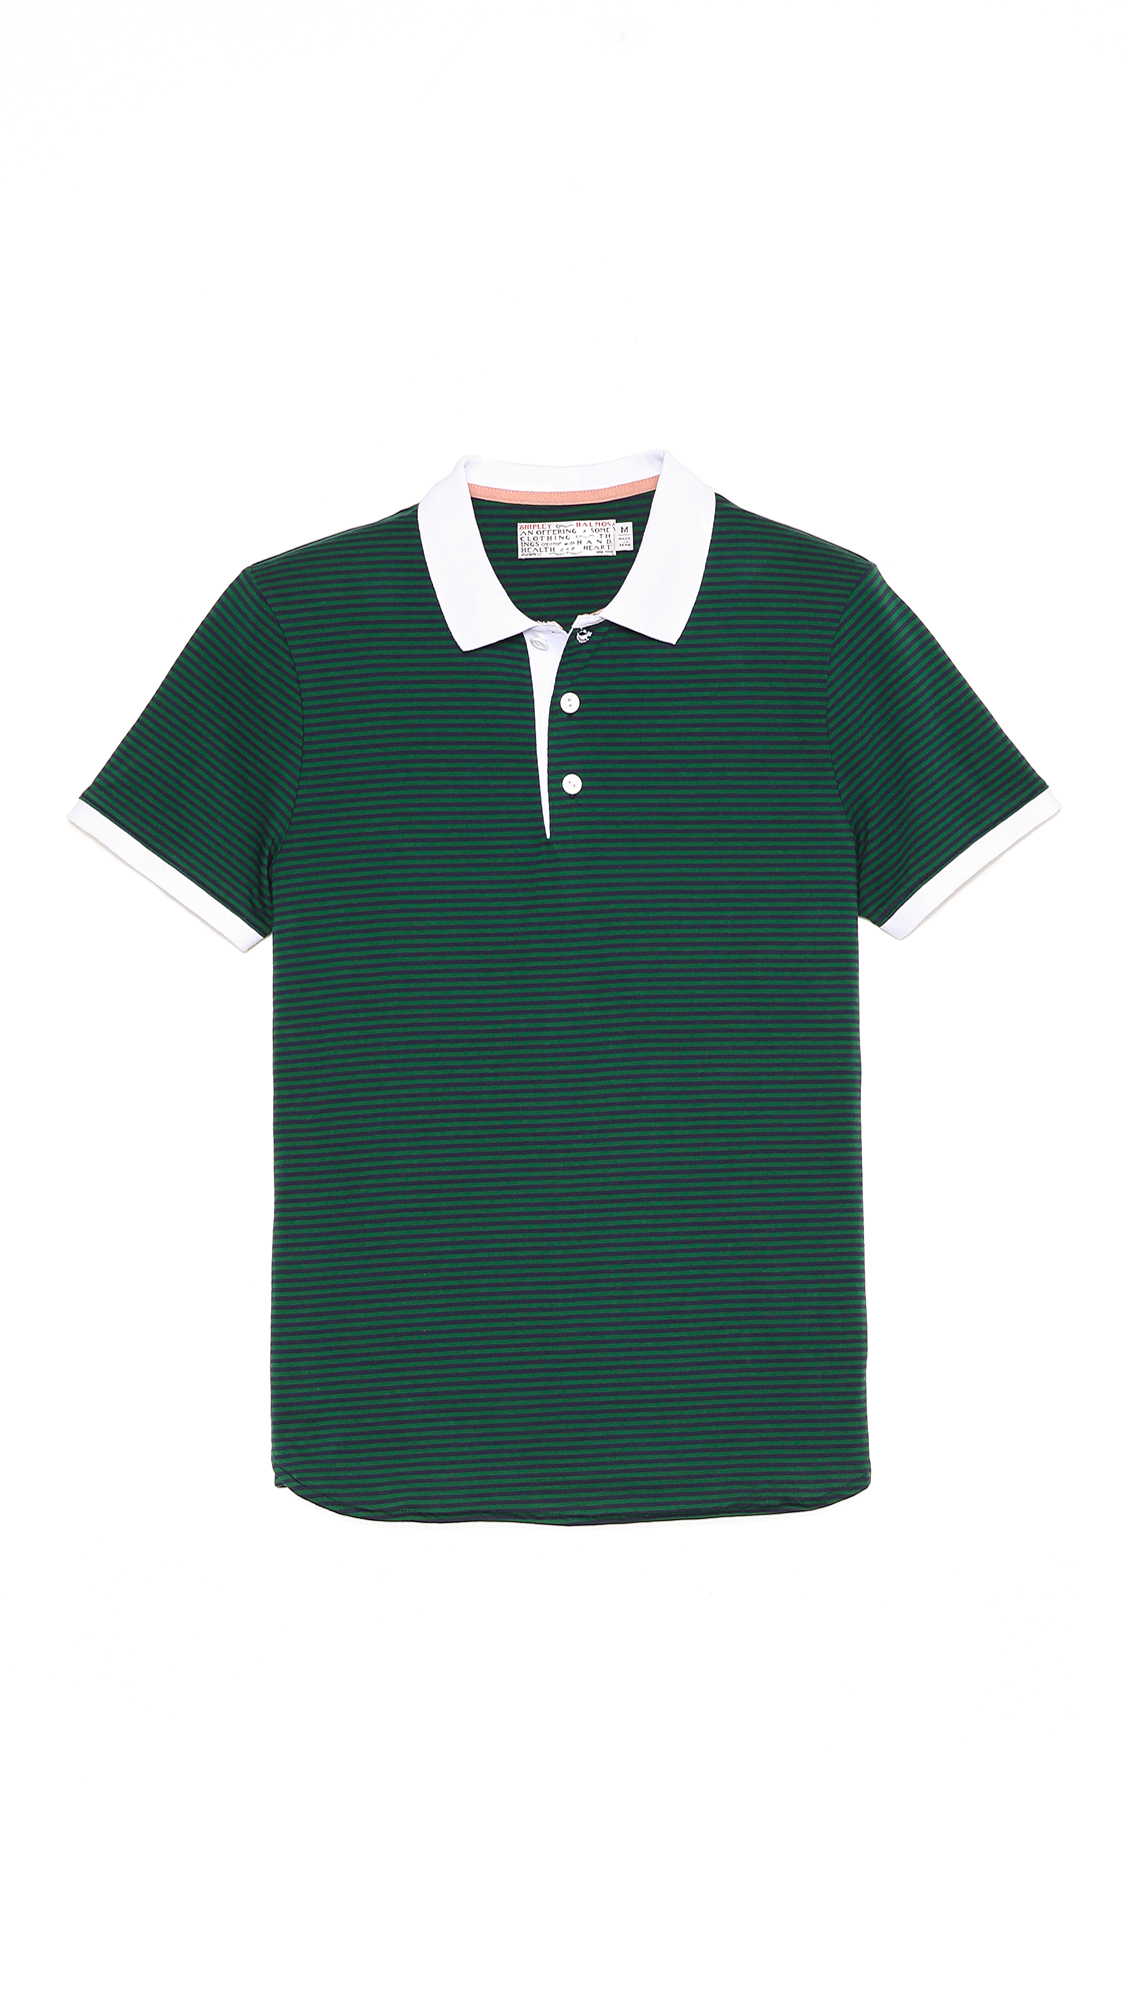 Lyst - Shipley & halmos Broome Kilt Polo Shirt in Green for Men